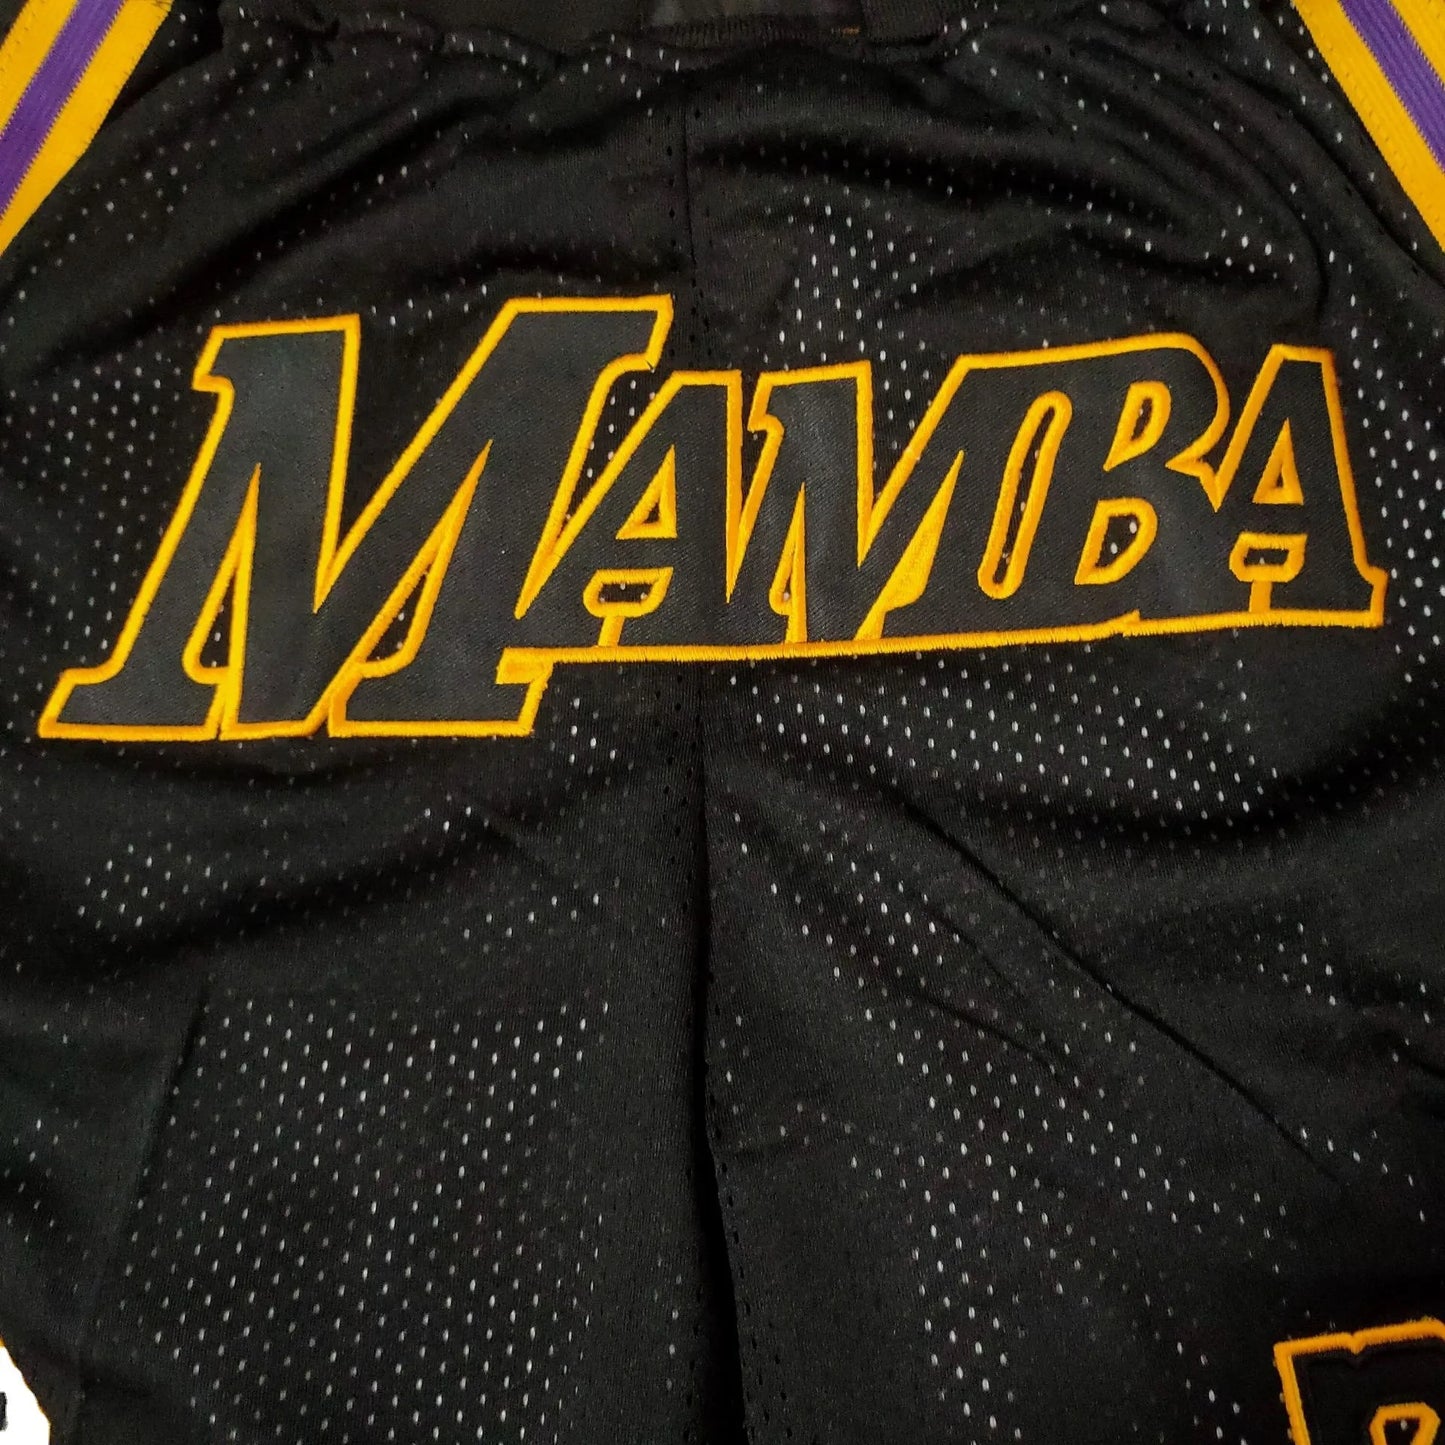 Men's Mamba Basketball Shorts